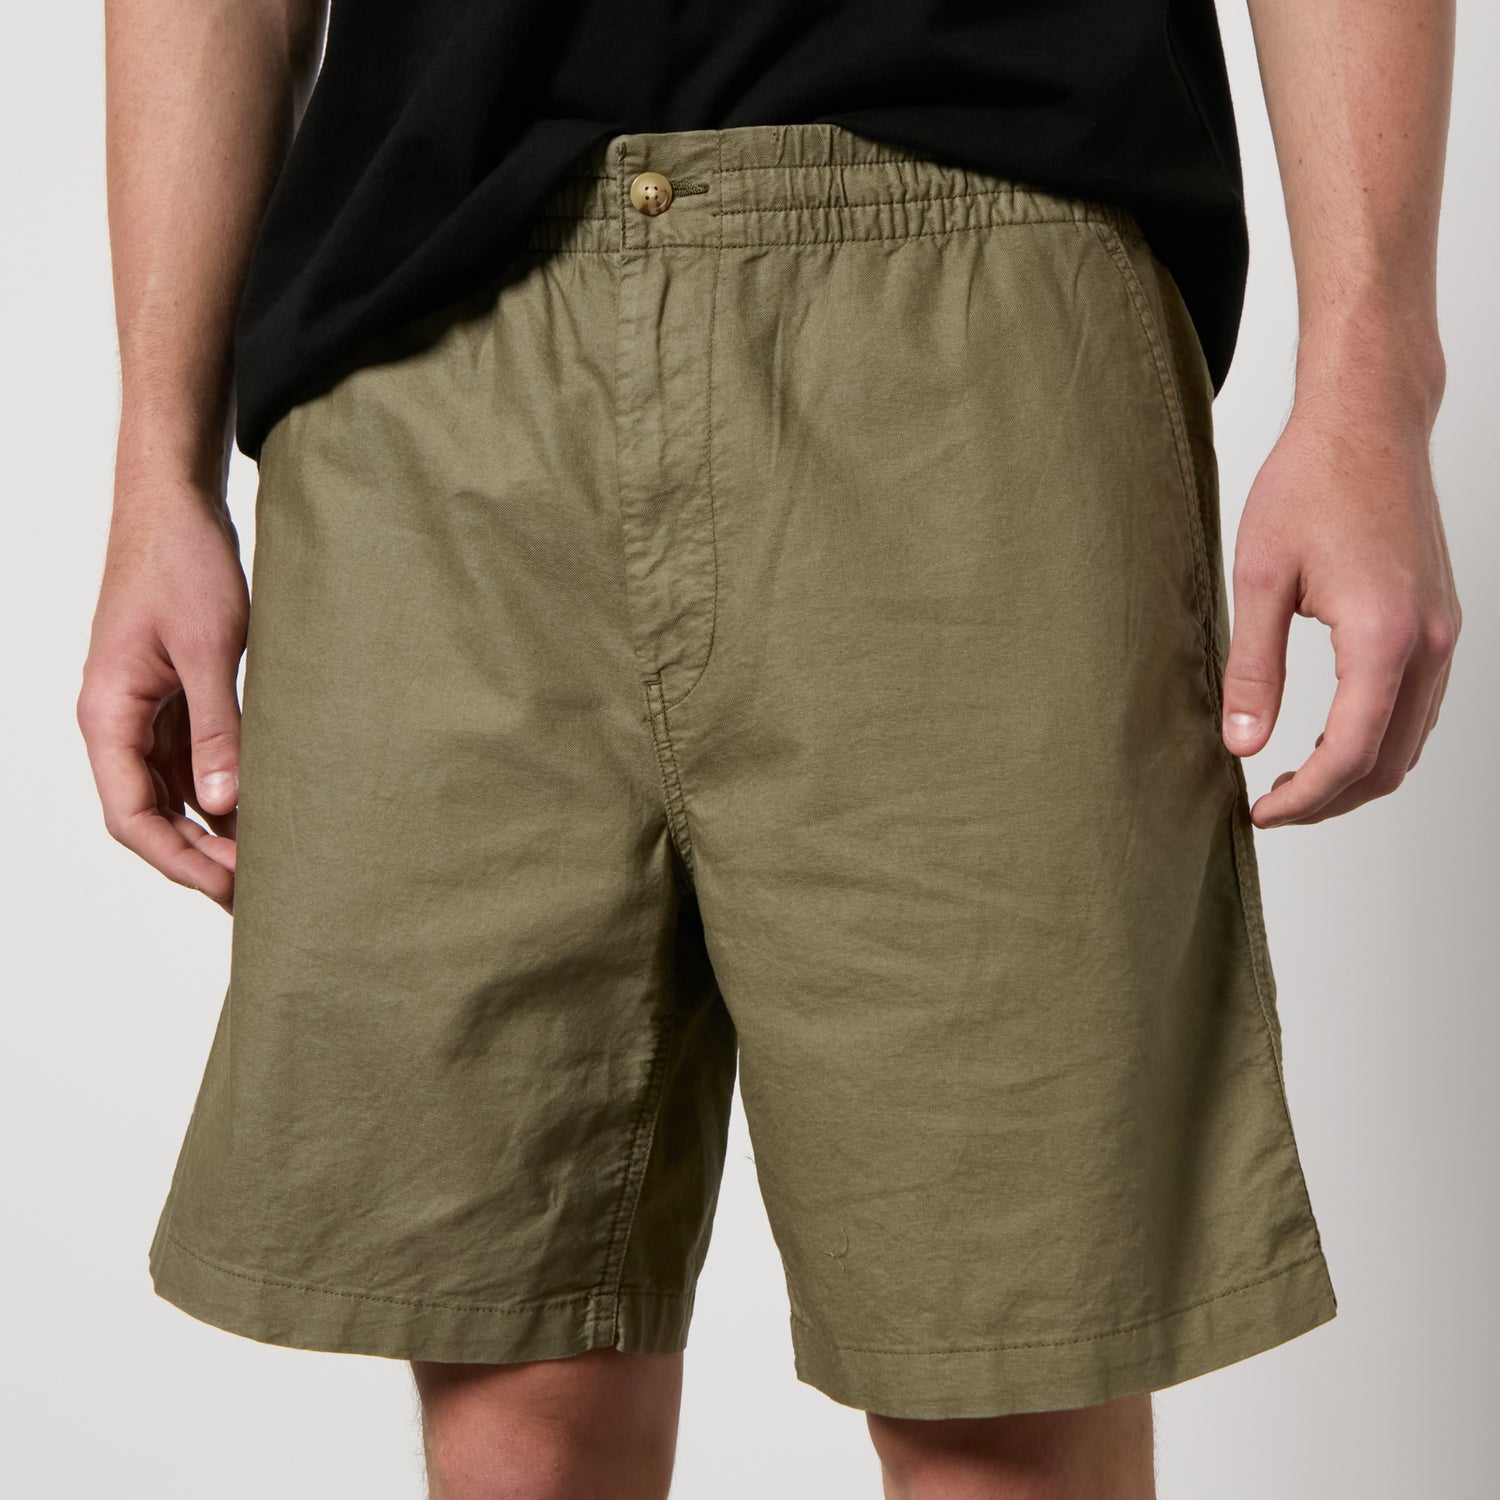 Polo Ralph Lauren Prepster Oxford Cotton Shorts - S